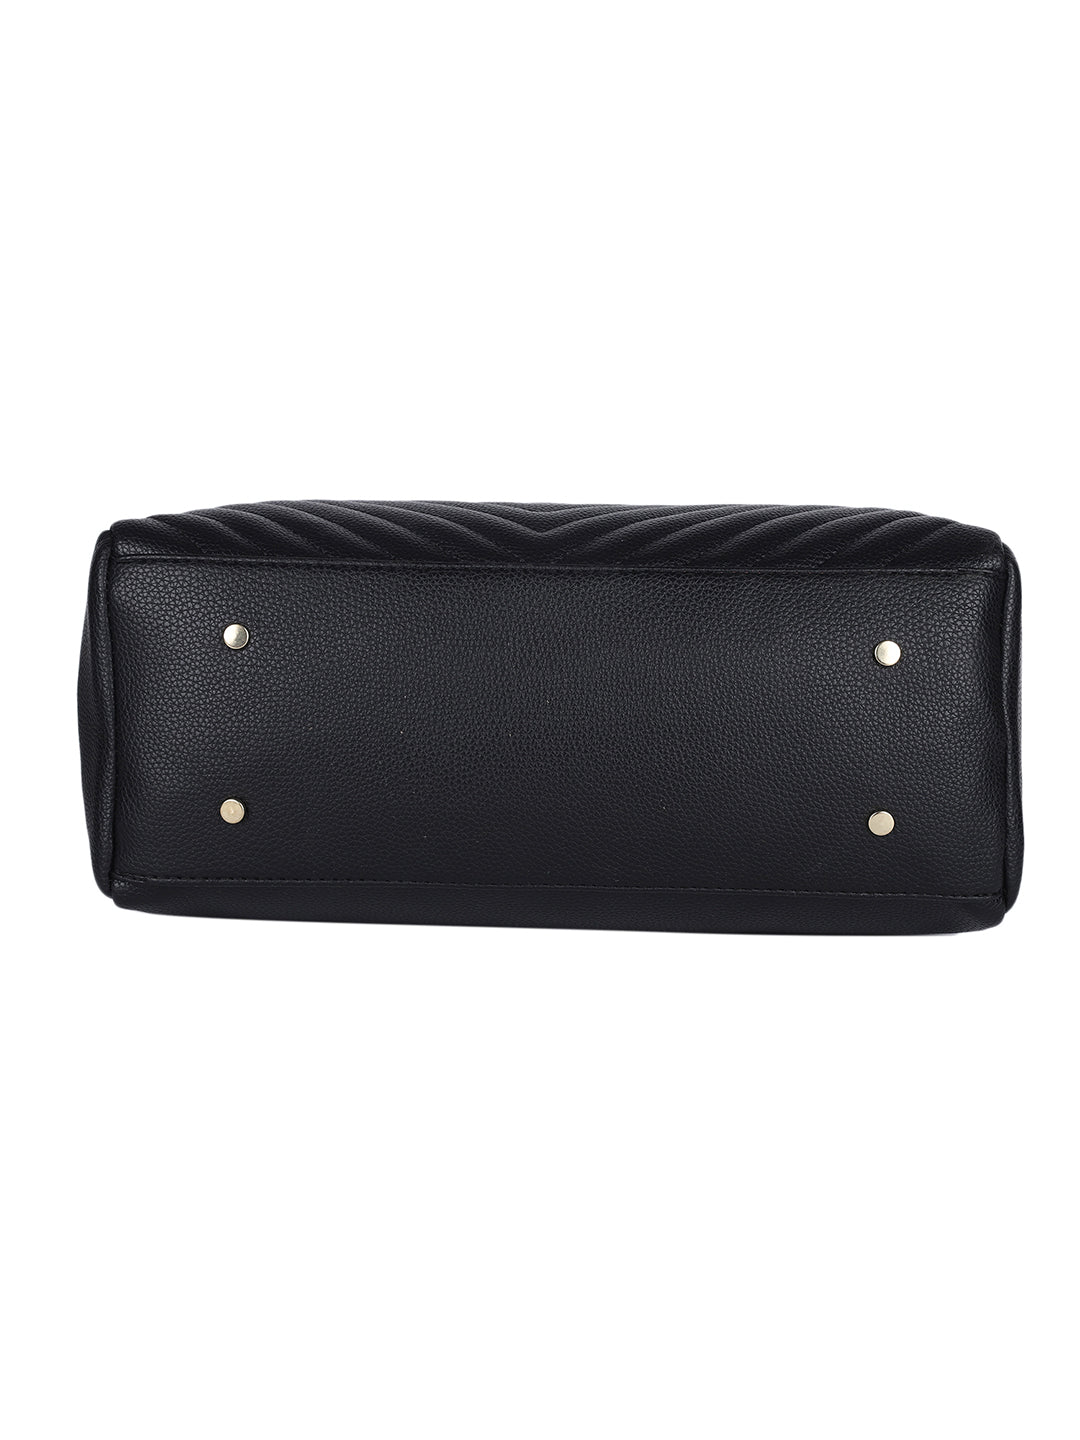 MINI WESST Black Solid Handheld Bag(MWTB108BL)